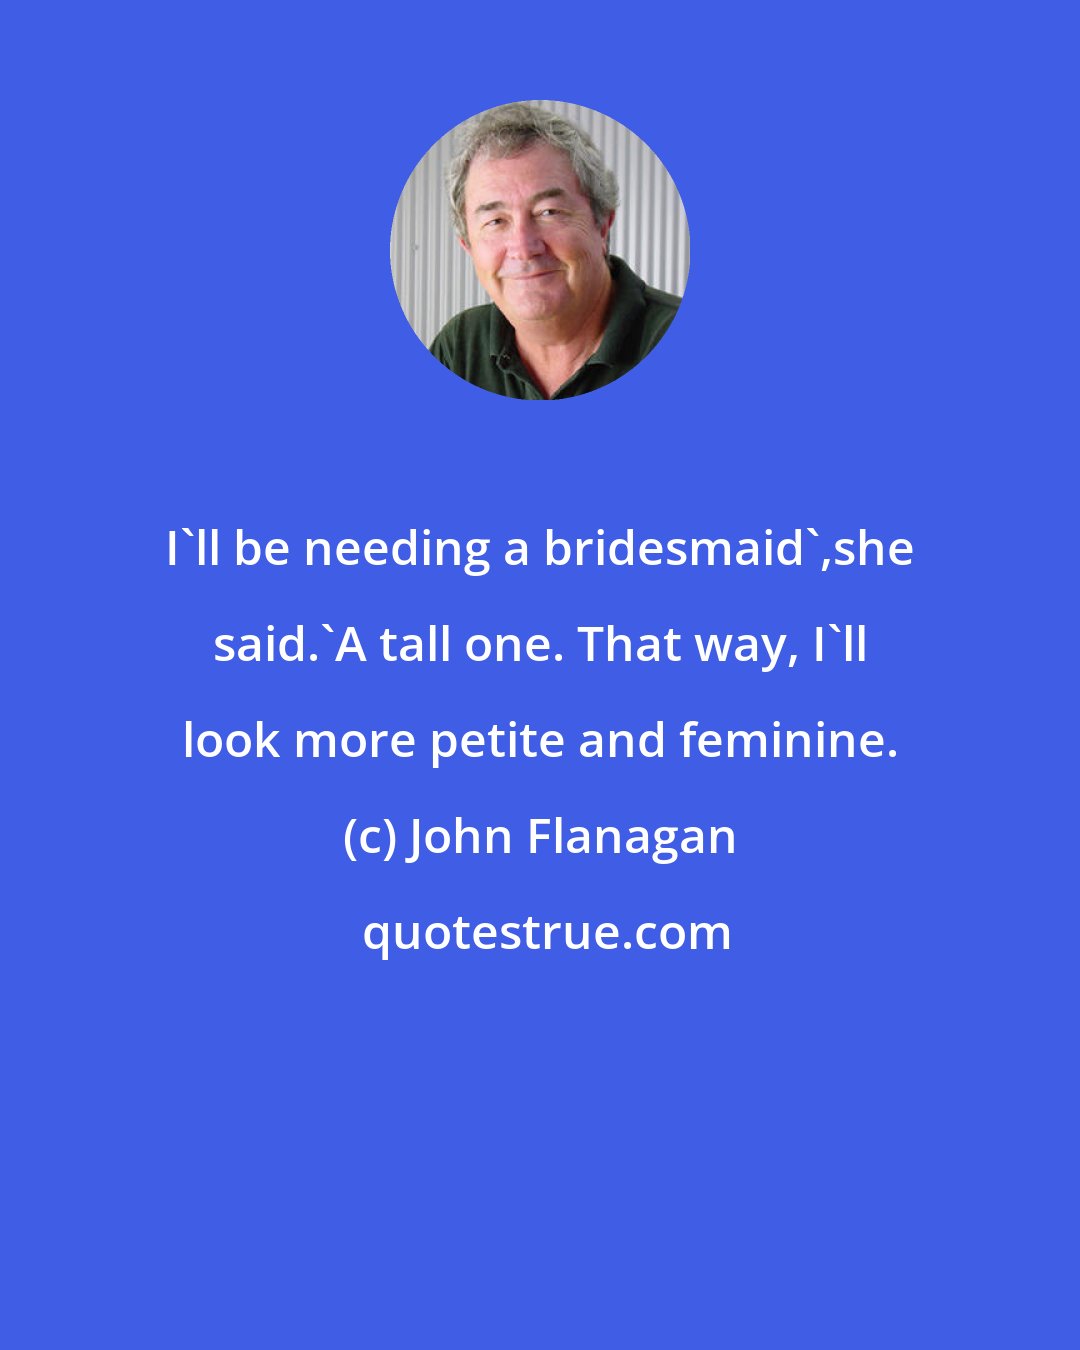 John Flanagan: I'll be needing a bridesmaid',she said.'A tall one. That way, I'll look more petite and feminine.